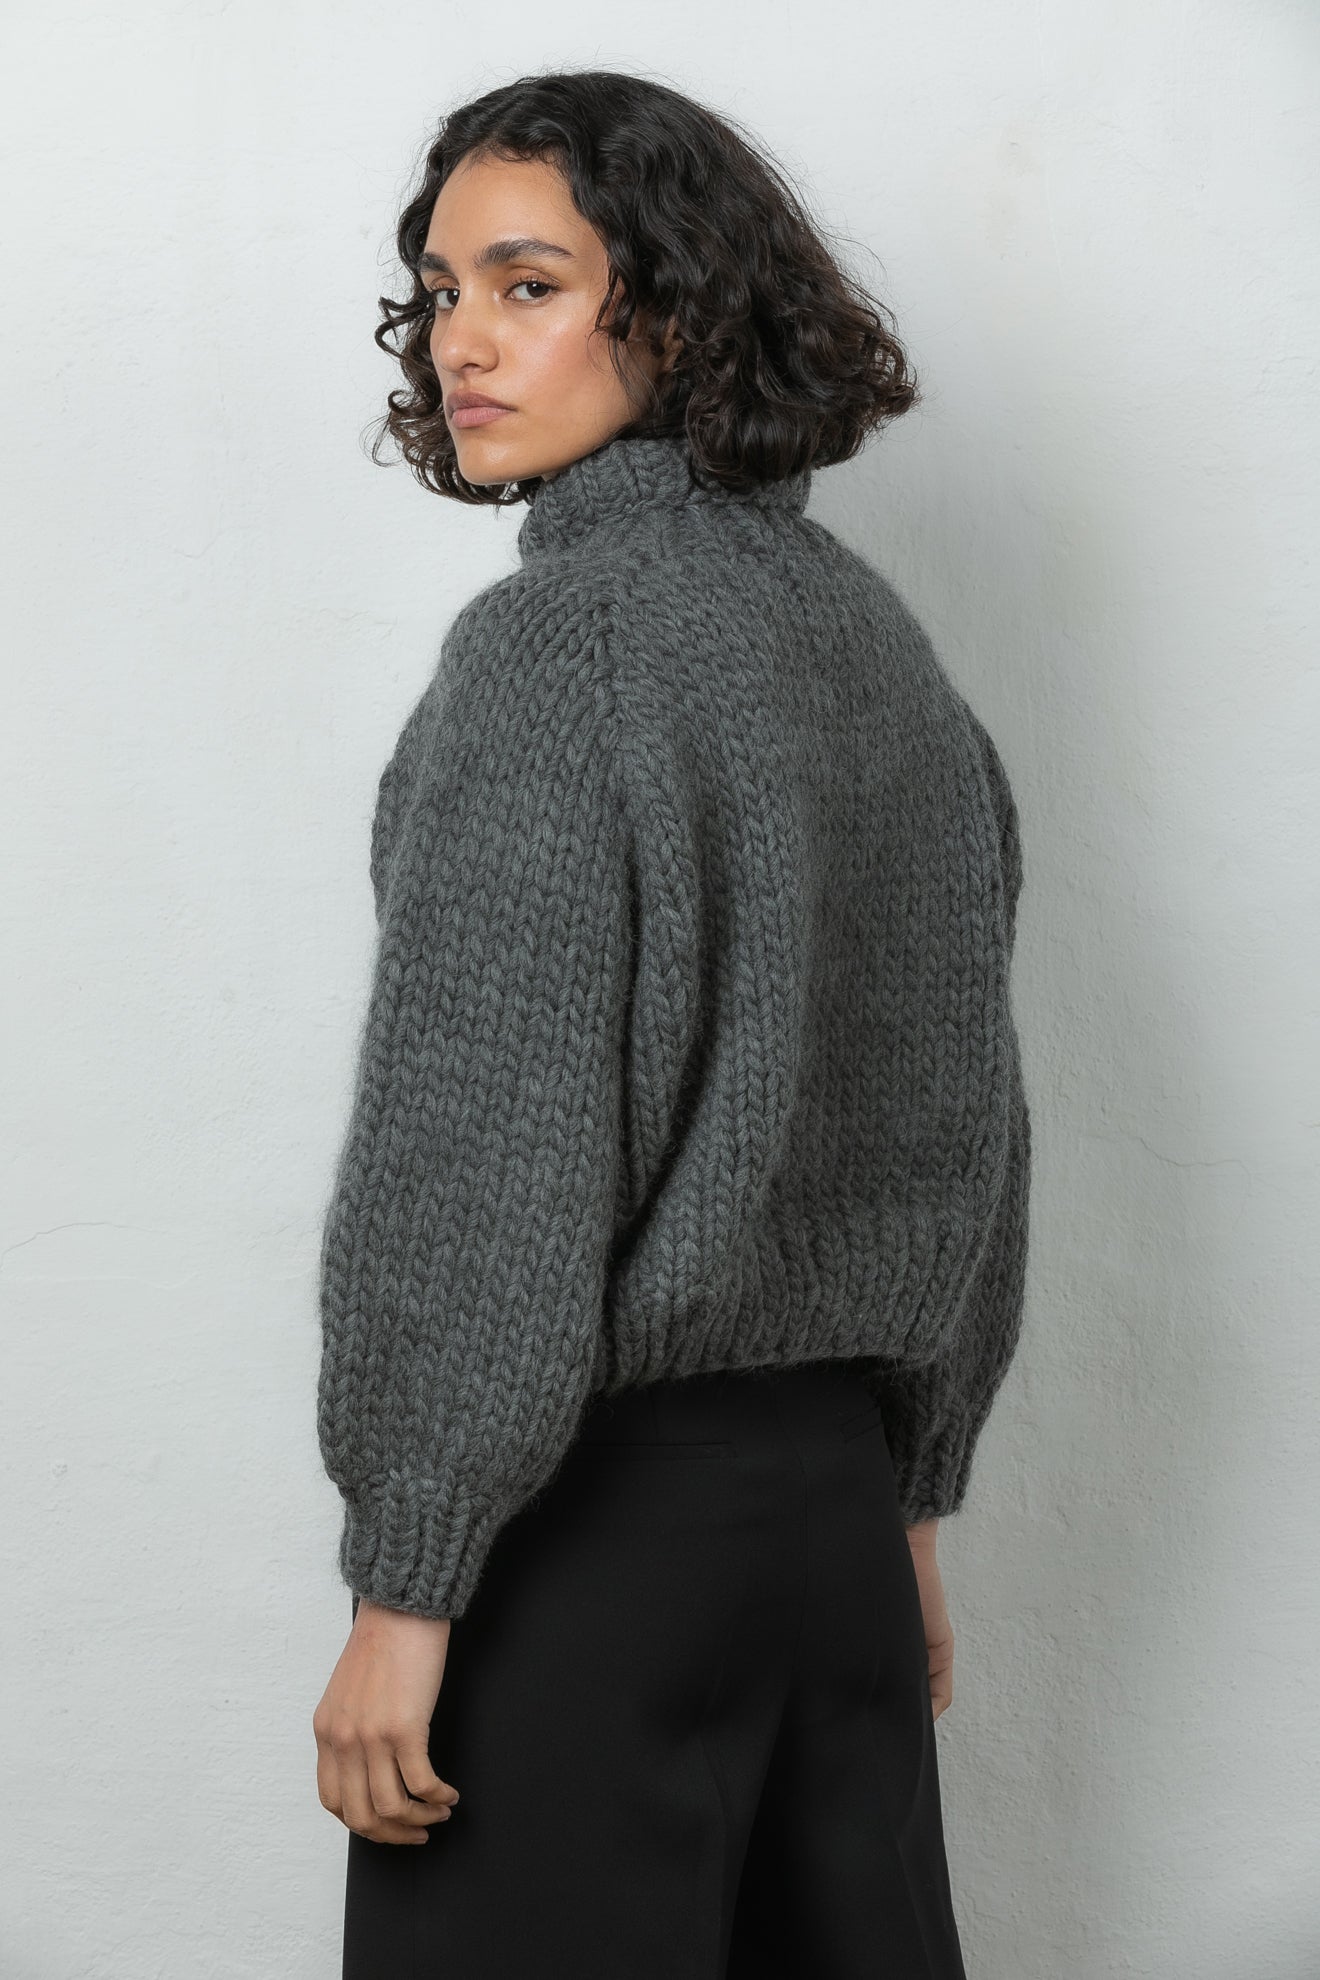 wool jumper chunky knit winter Mr Mittens collar grey charcoal